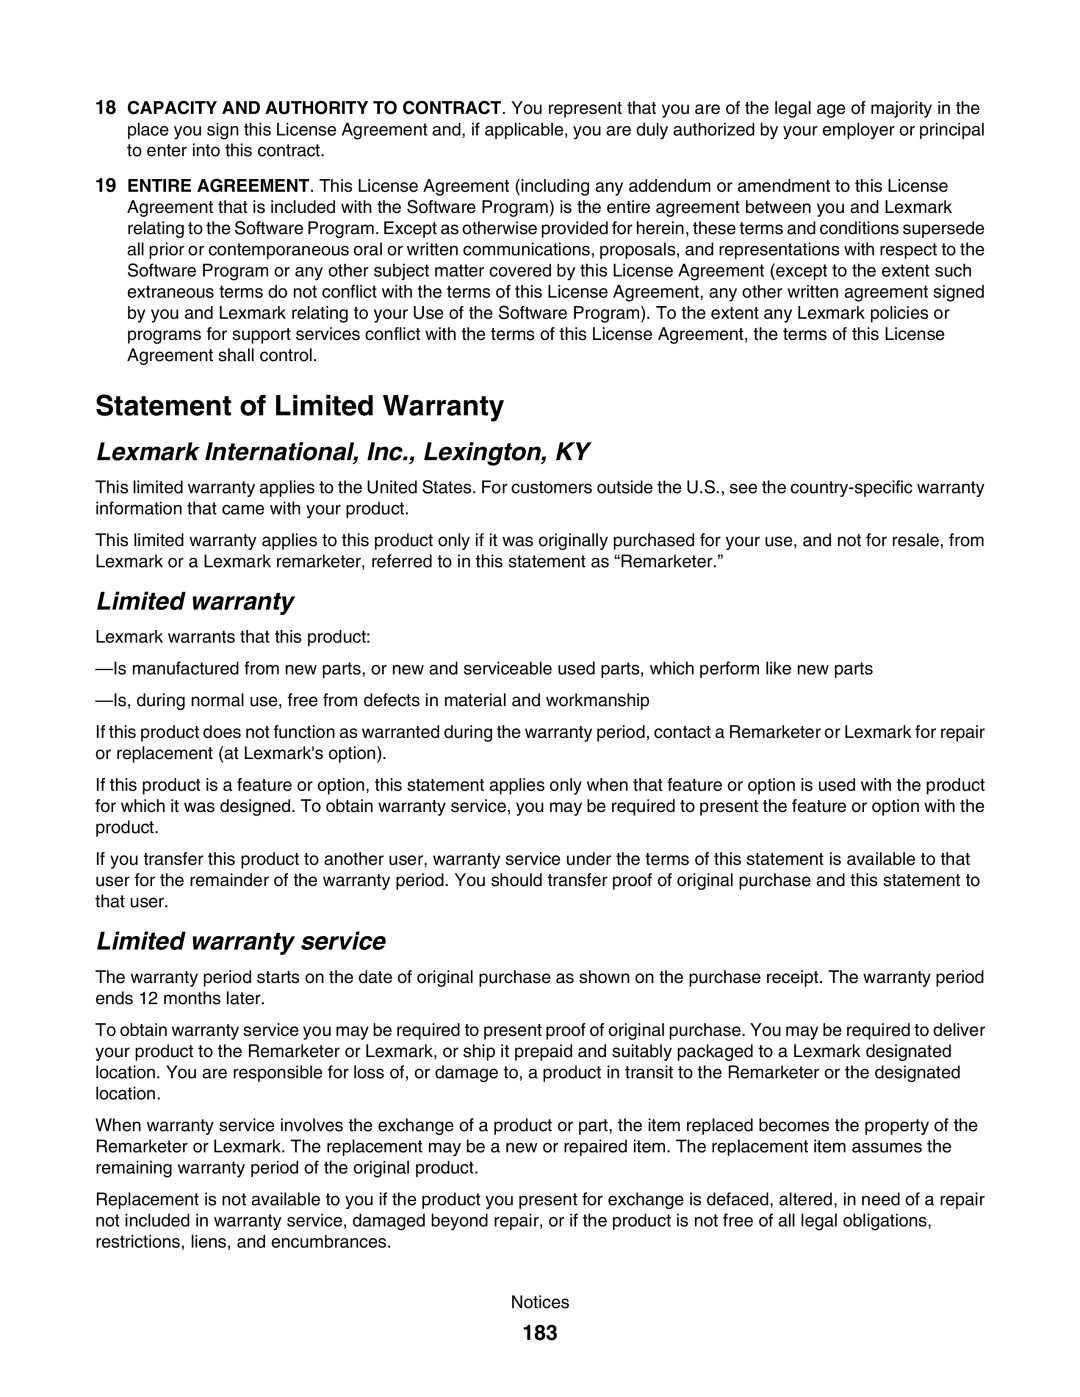 Lexmark 5000 Series manual Statement of Limited Warranty, Lexmark International, Inc., Lexington, KY, Limited warranty, 183 